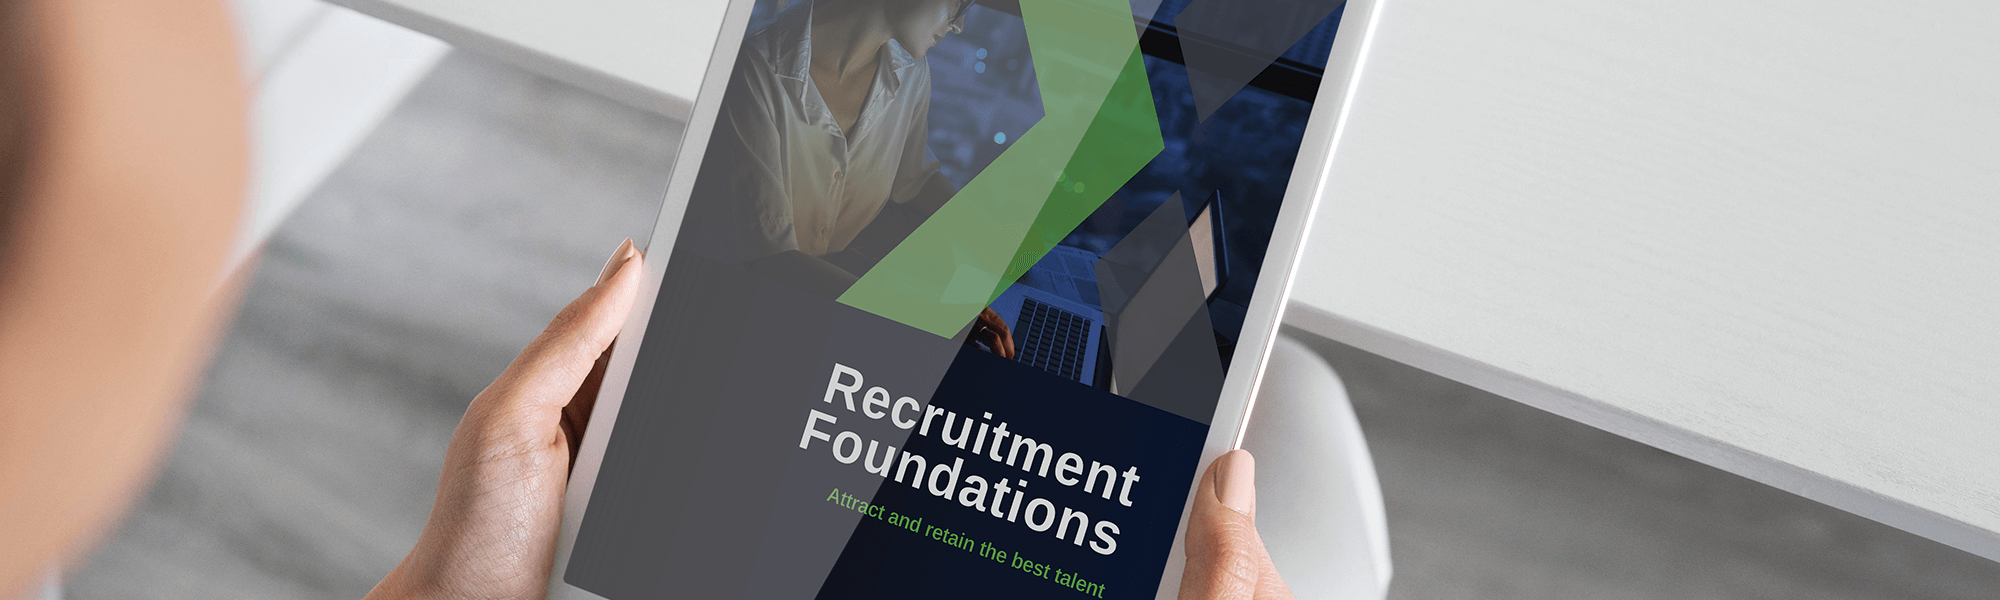 Recruitment Foundations eGuide